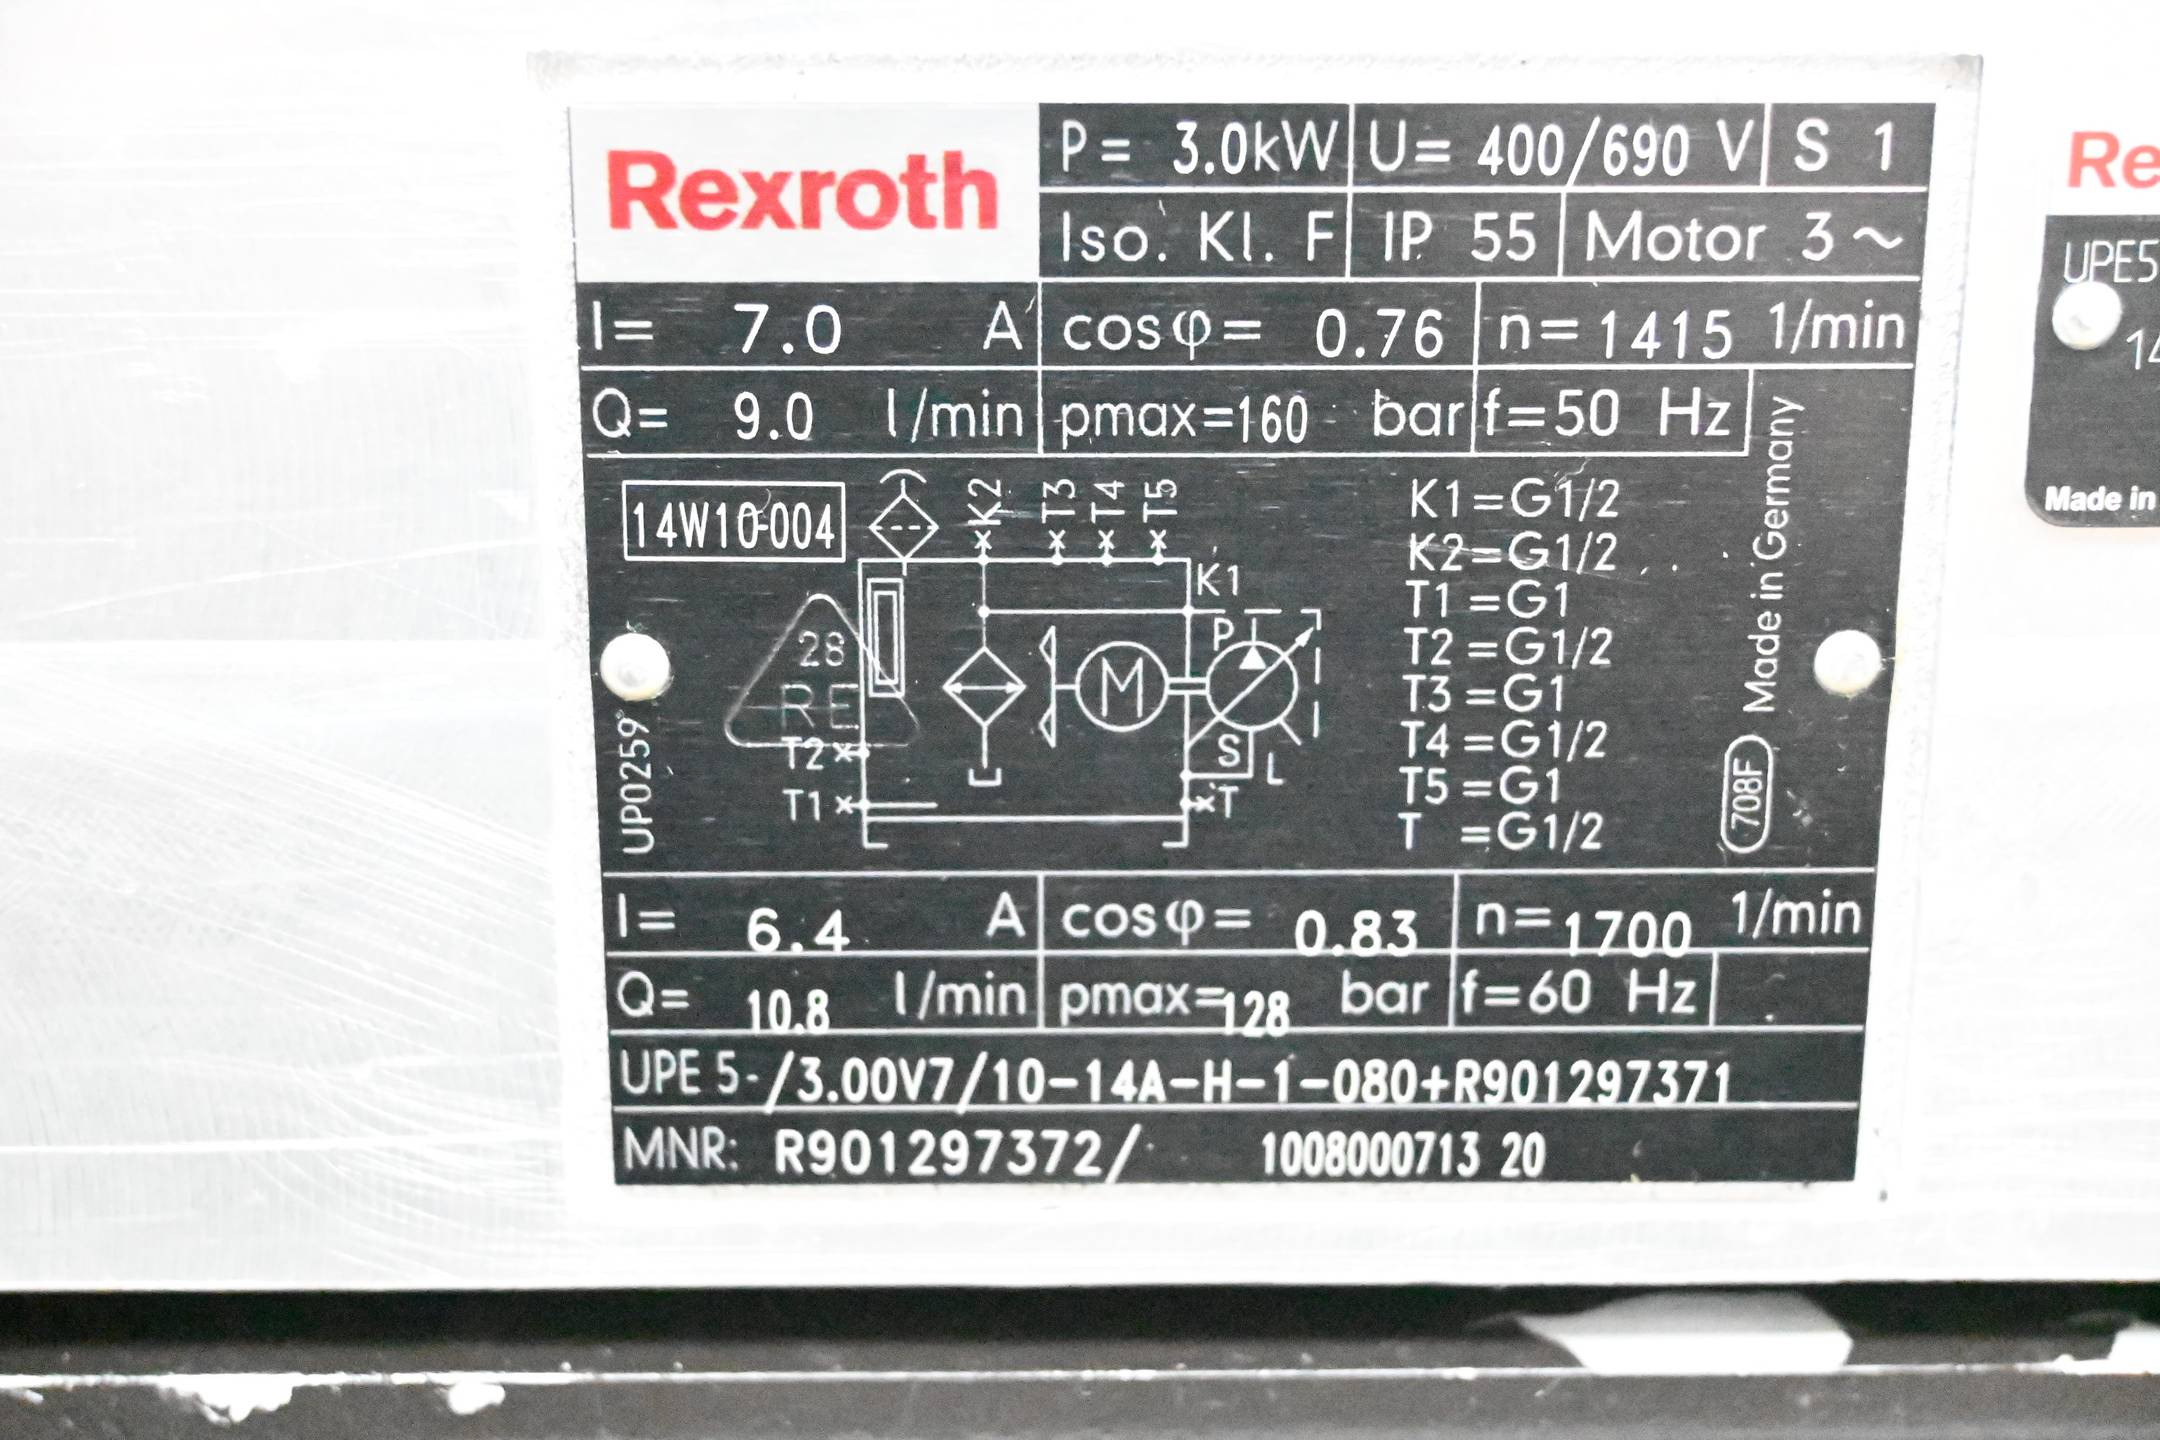 Rexroth Kompaktaggregat UPE5-1X/3,00V7/10-14A-H-1-080+R901297371 ( R901297372 )